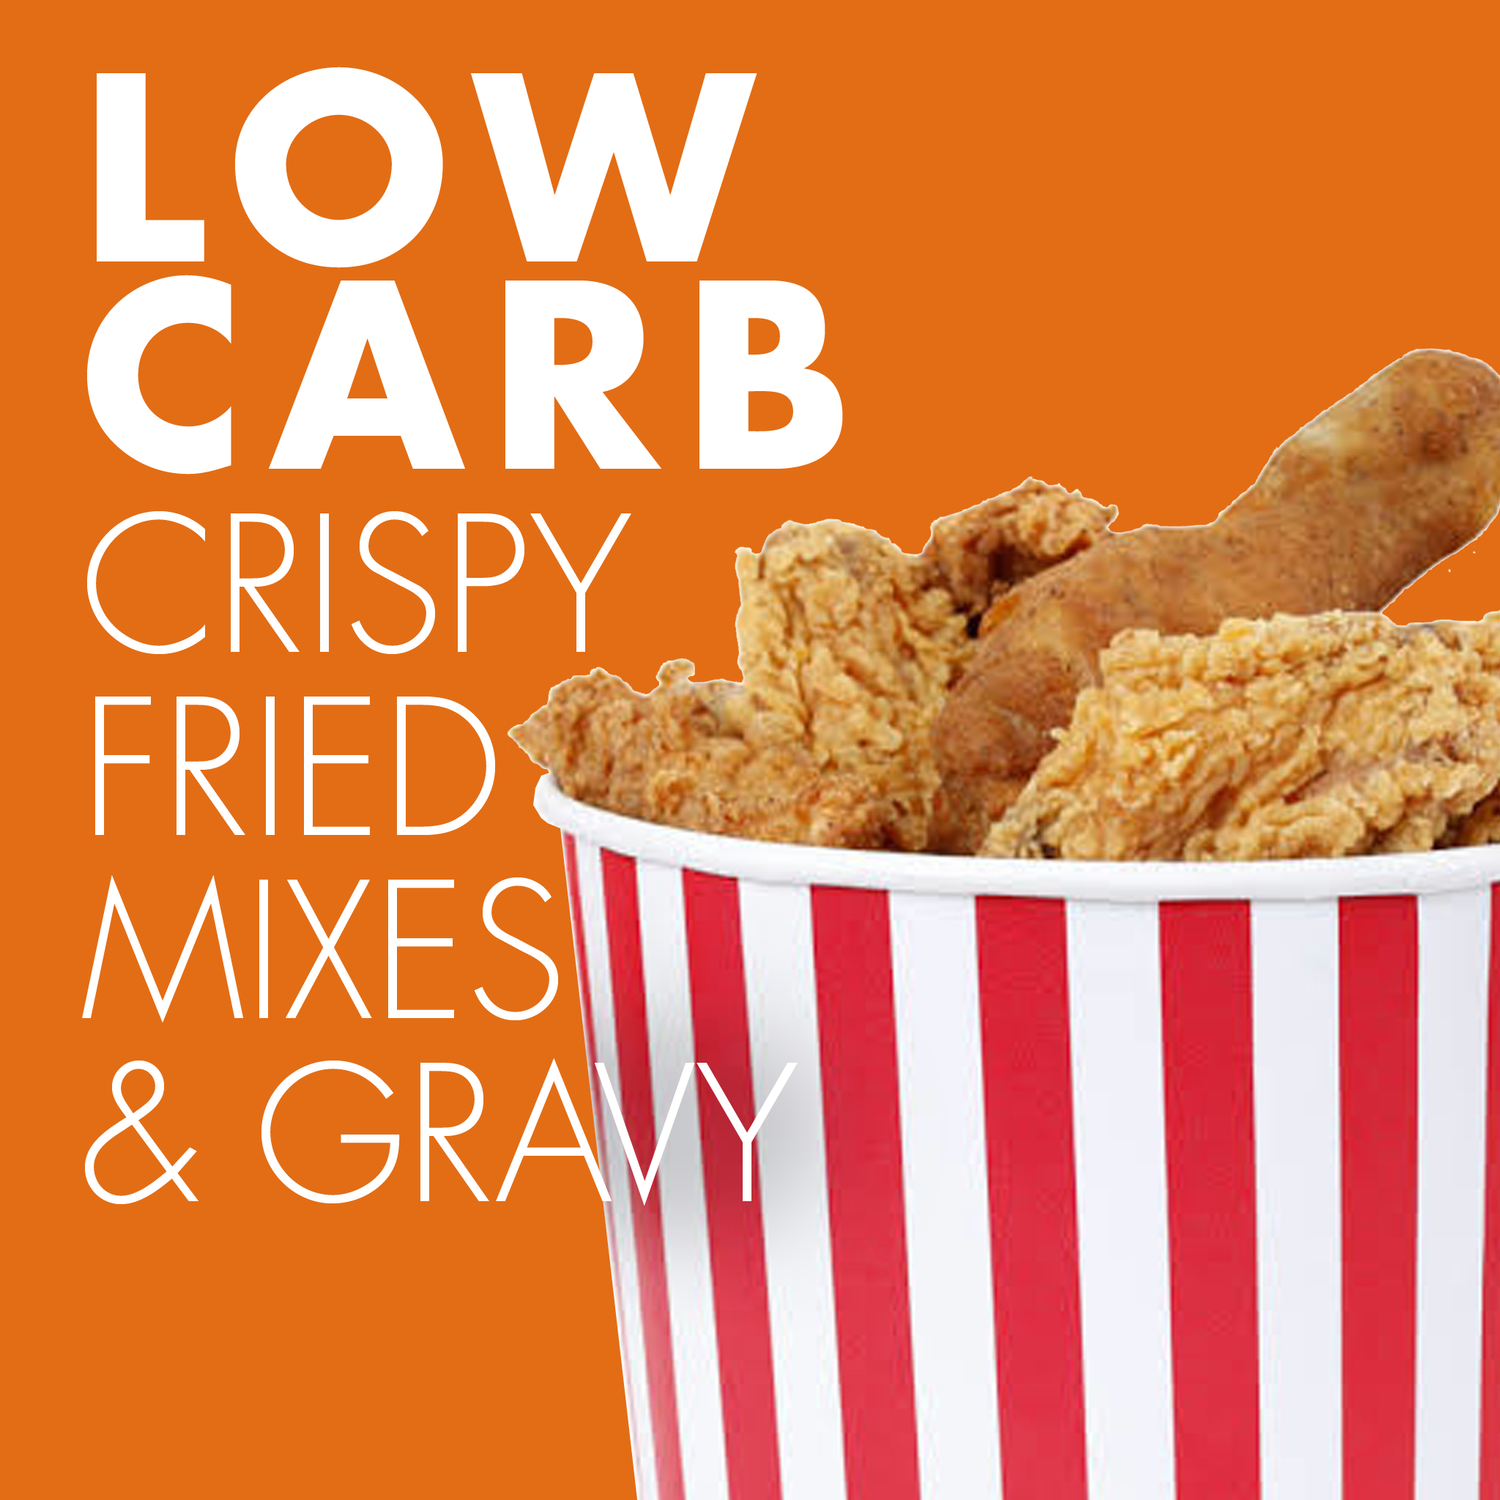 Keto Low-carb Crispy Fry Mixes & Gravy